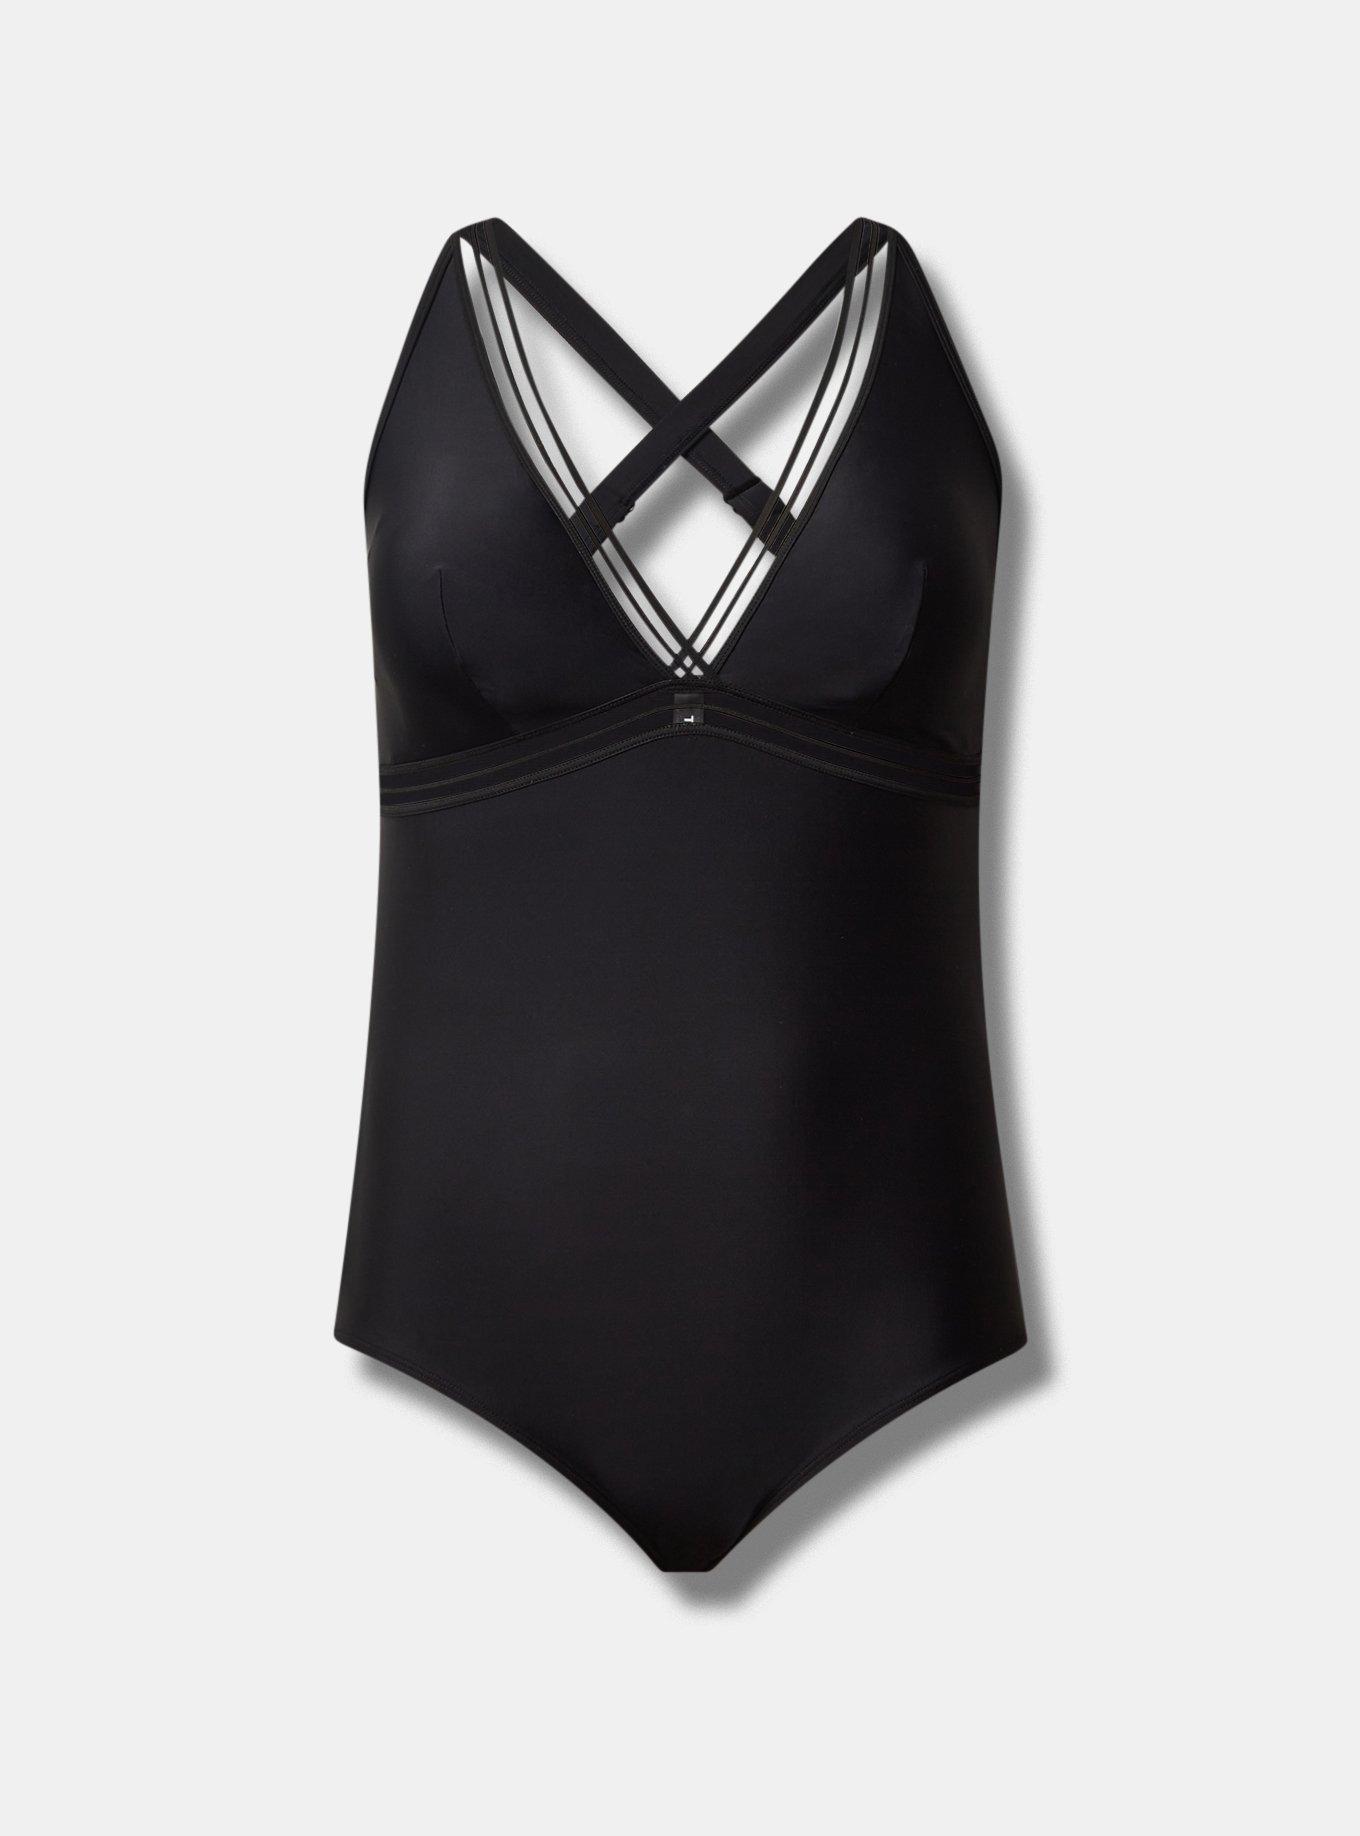 Torrid vixen shapewear swim collection size 2X NWT black lace